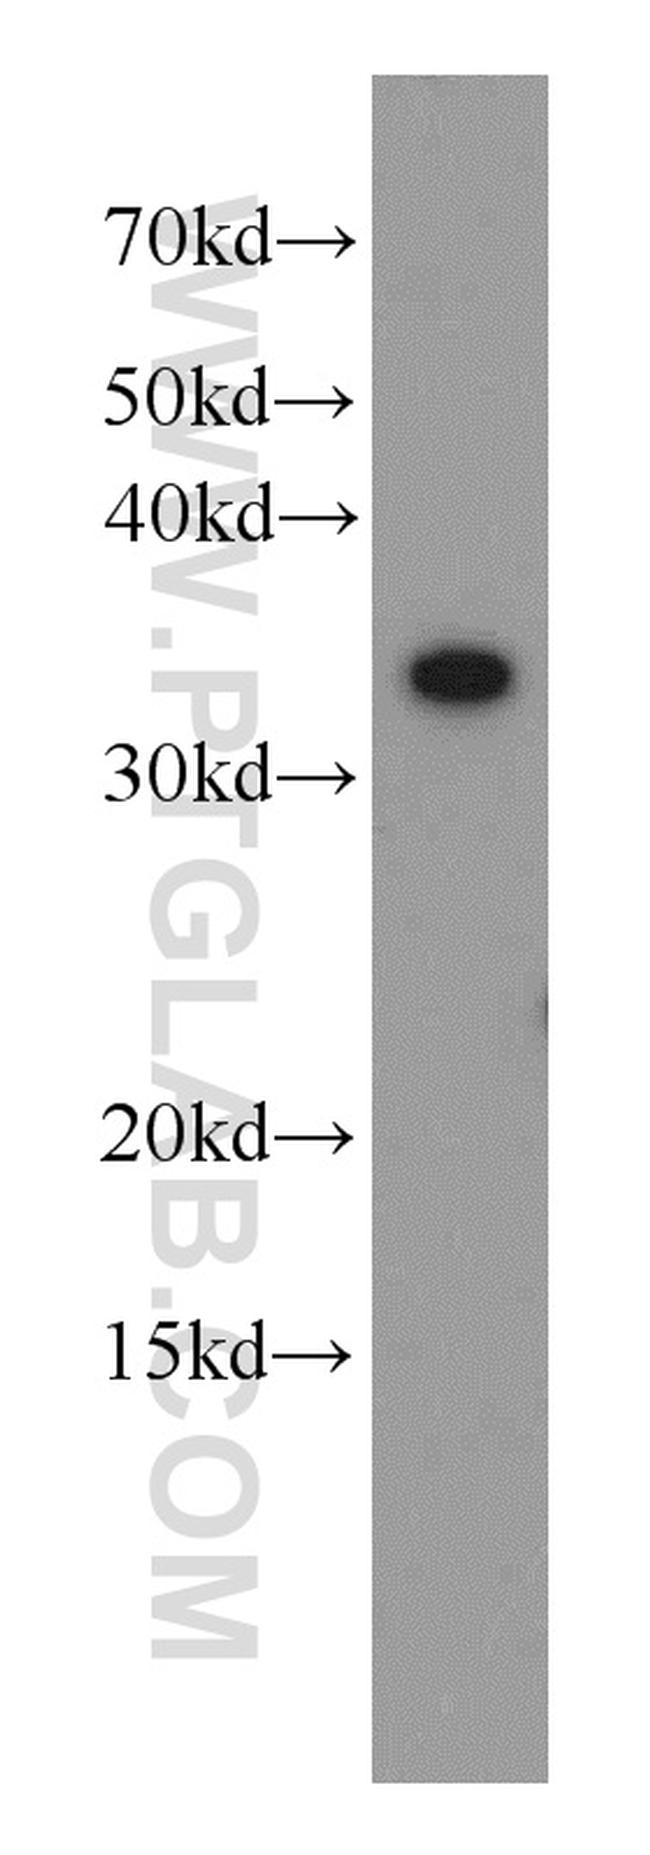 TXNL1 Antibody in Western Blot (WB)